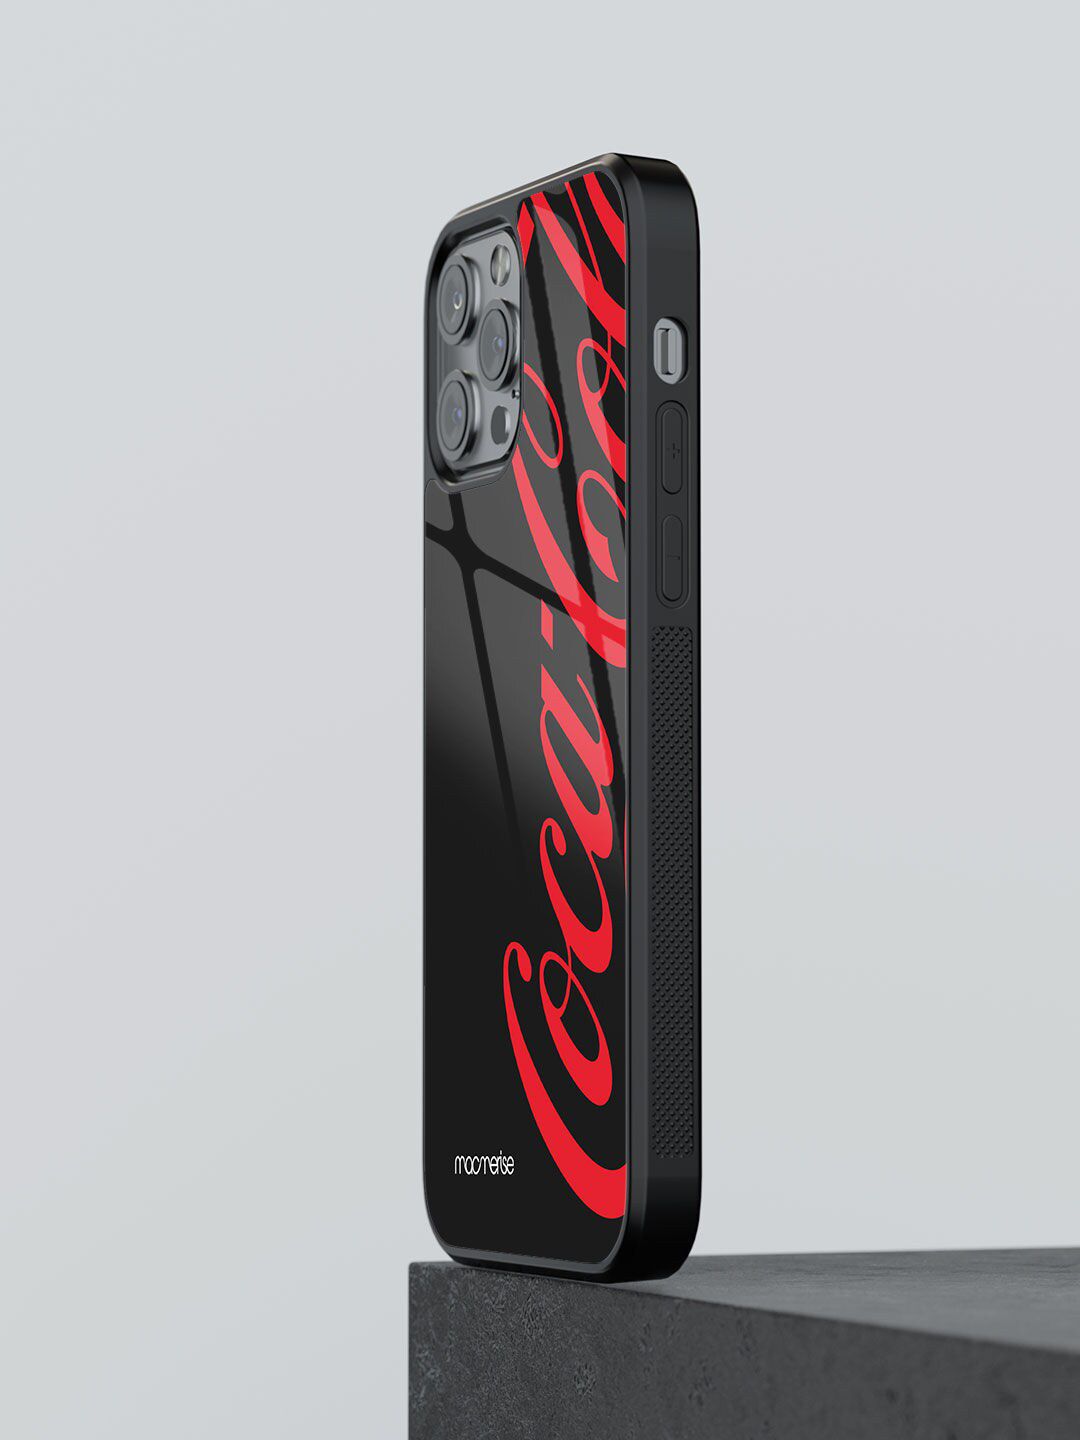 macmerise Black & Red Coke  iPhone 12 Pro Max Back Case Price in India